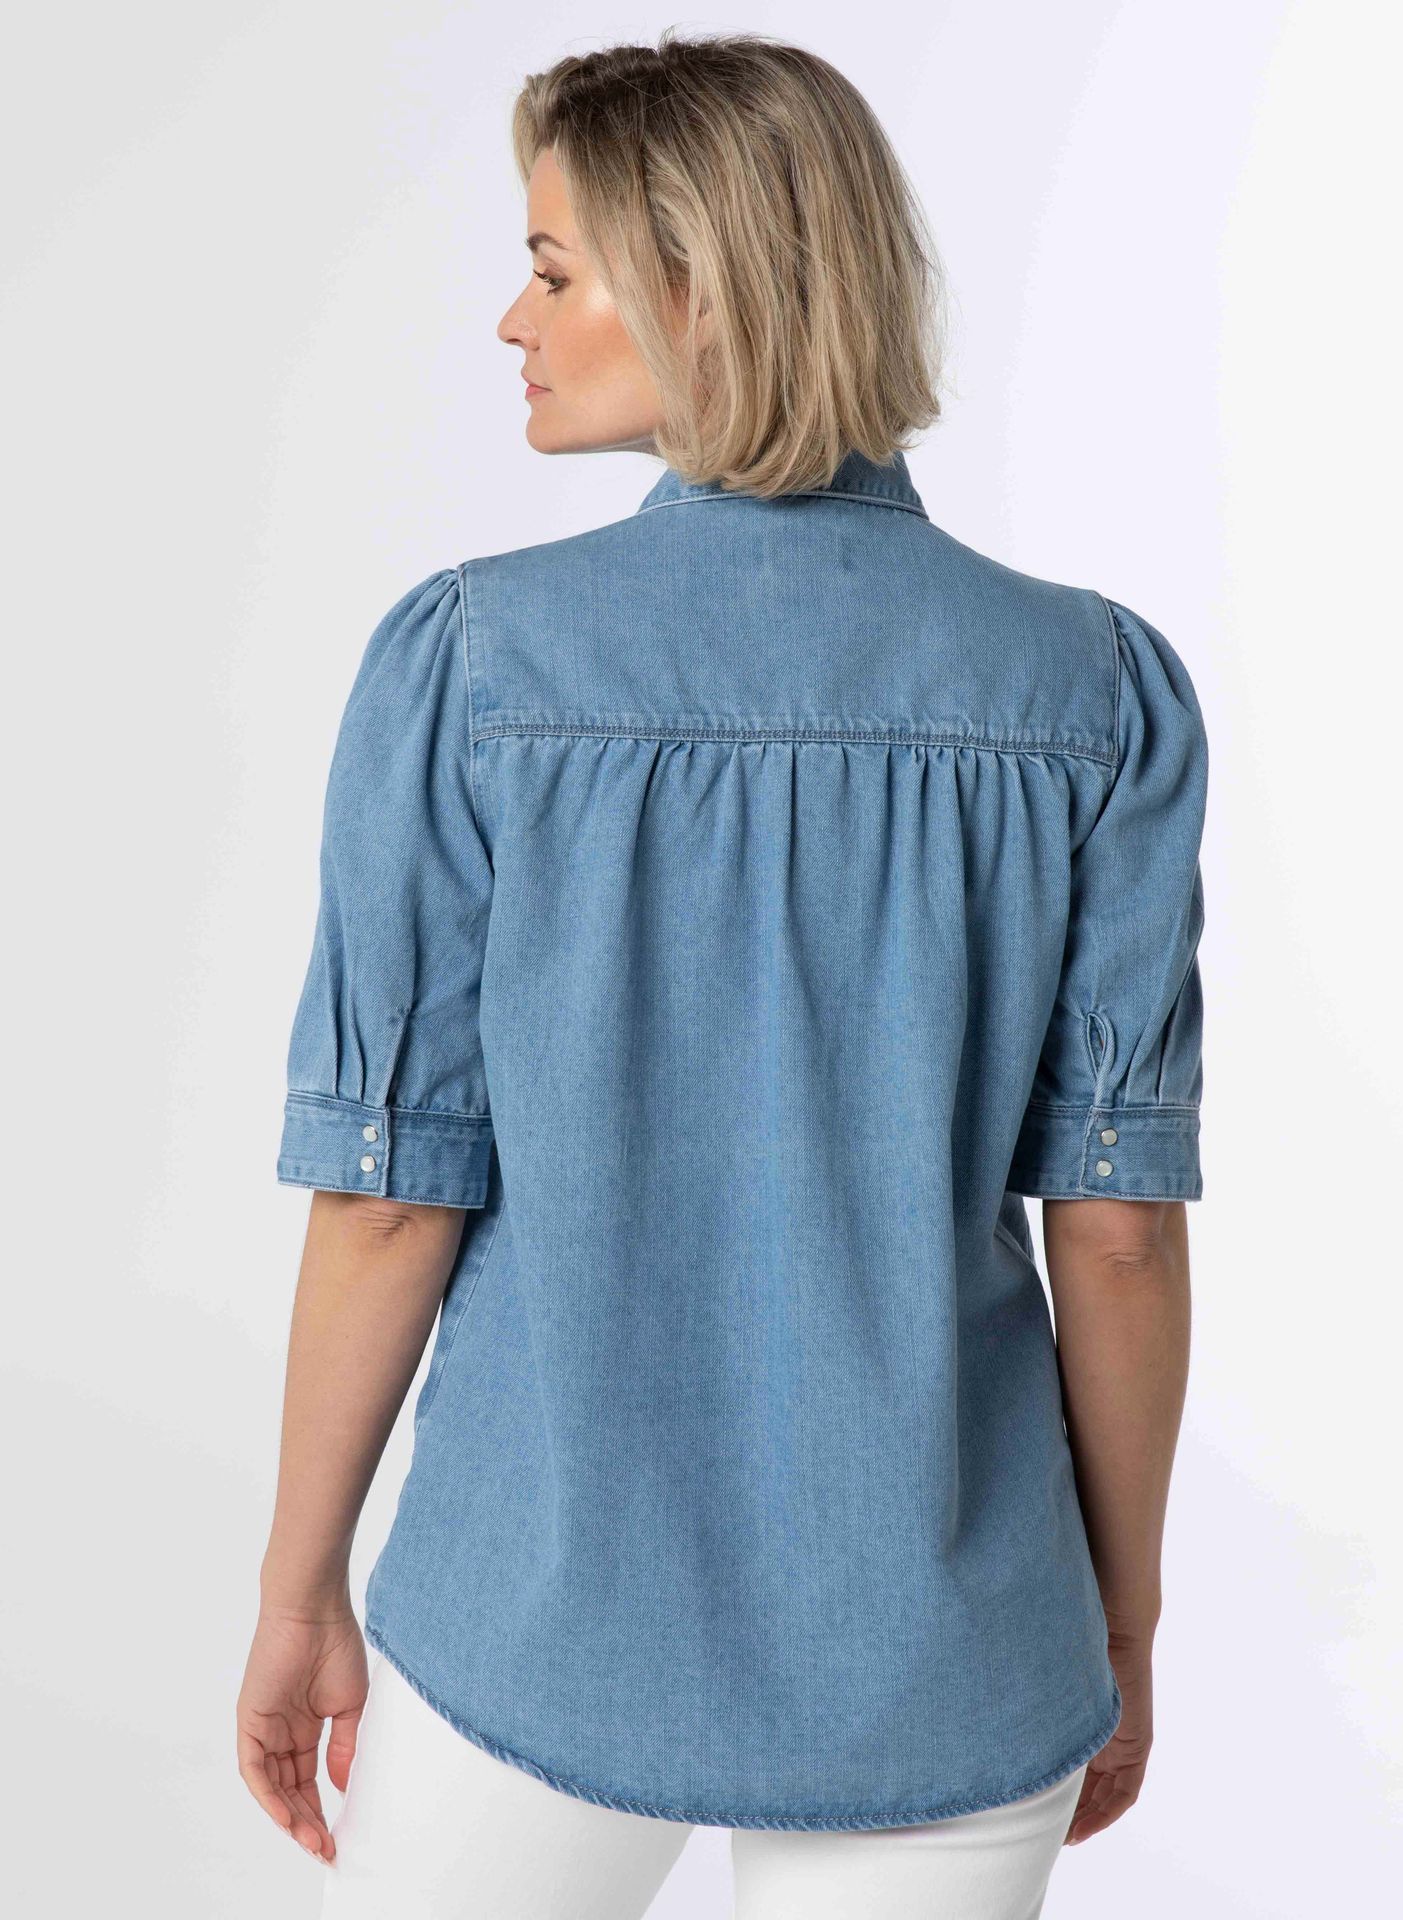 Norah Denim blouse blauw blue 212390-400